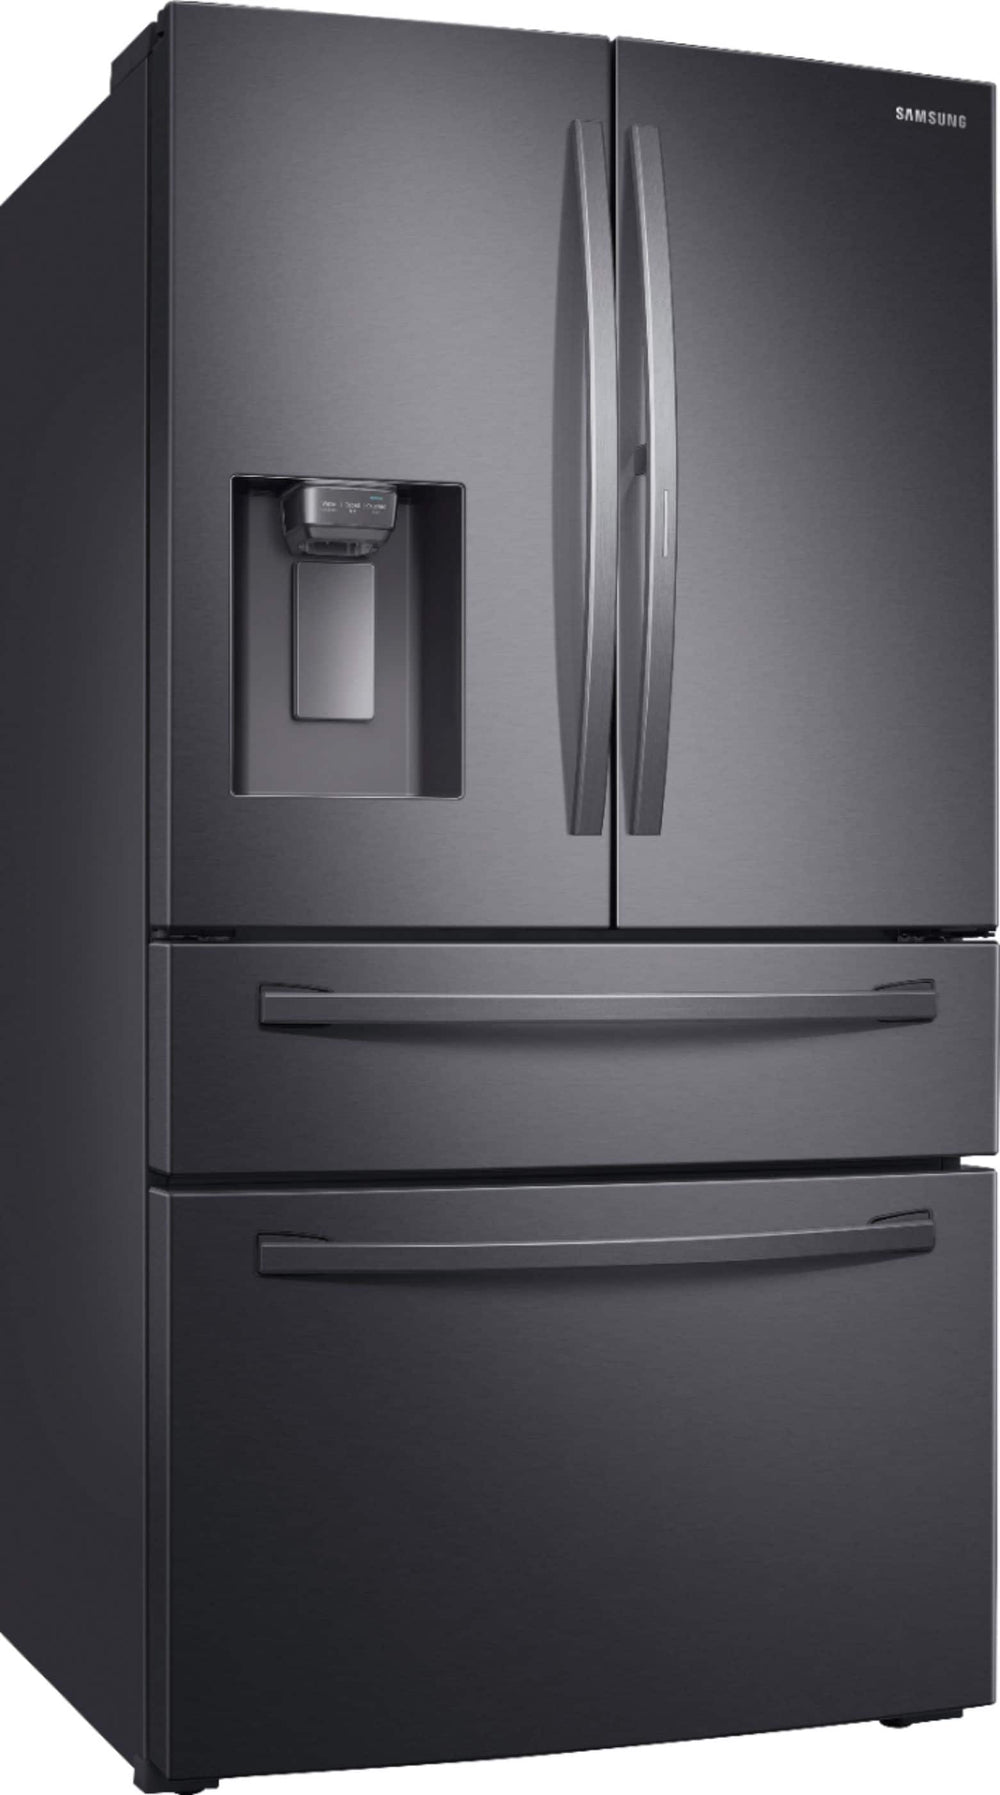 Samsung - 22.4 cu. ft. 4-Door French Door Counter Depth Refrigerator with Food Showcase - Black stainless steel_1